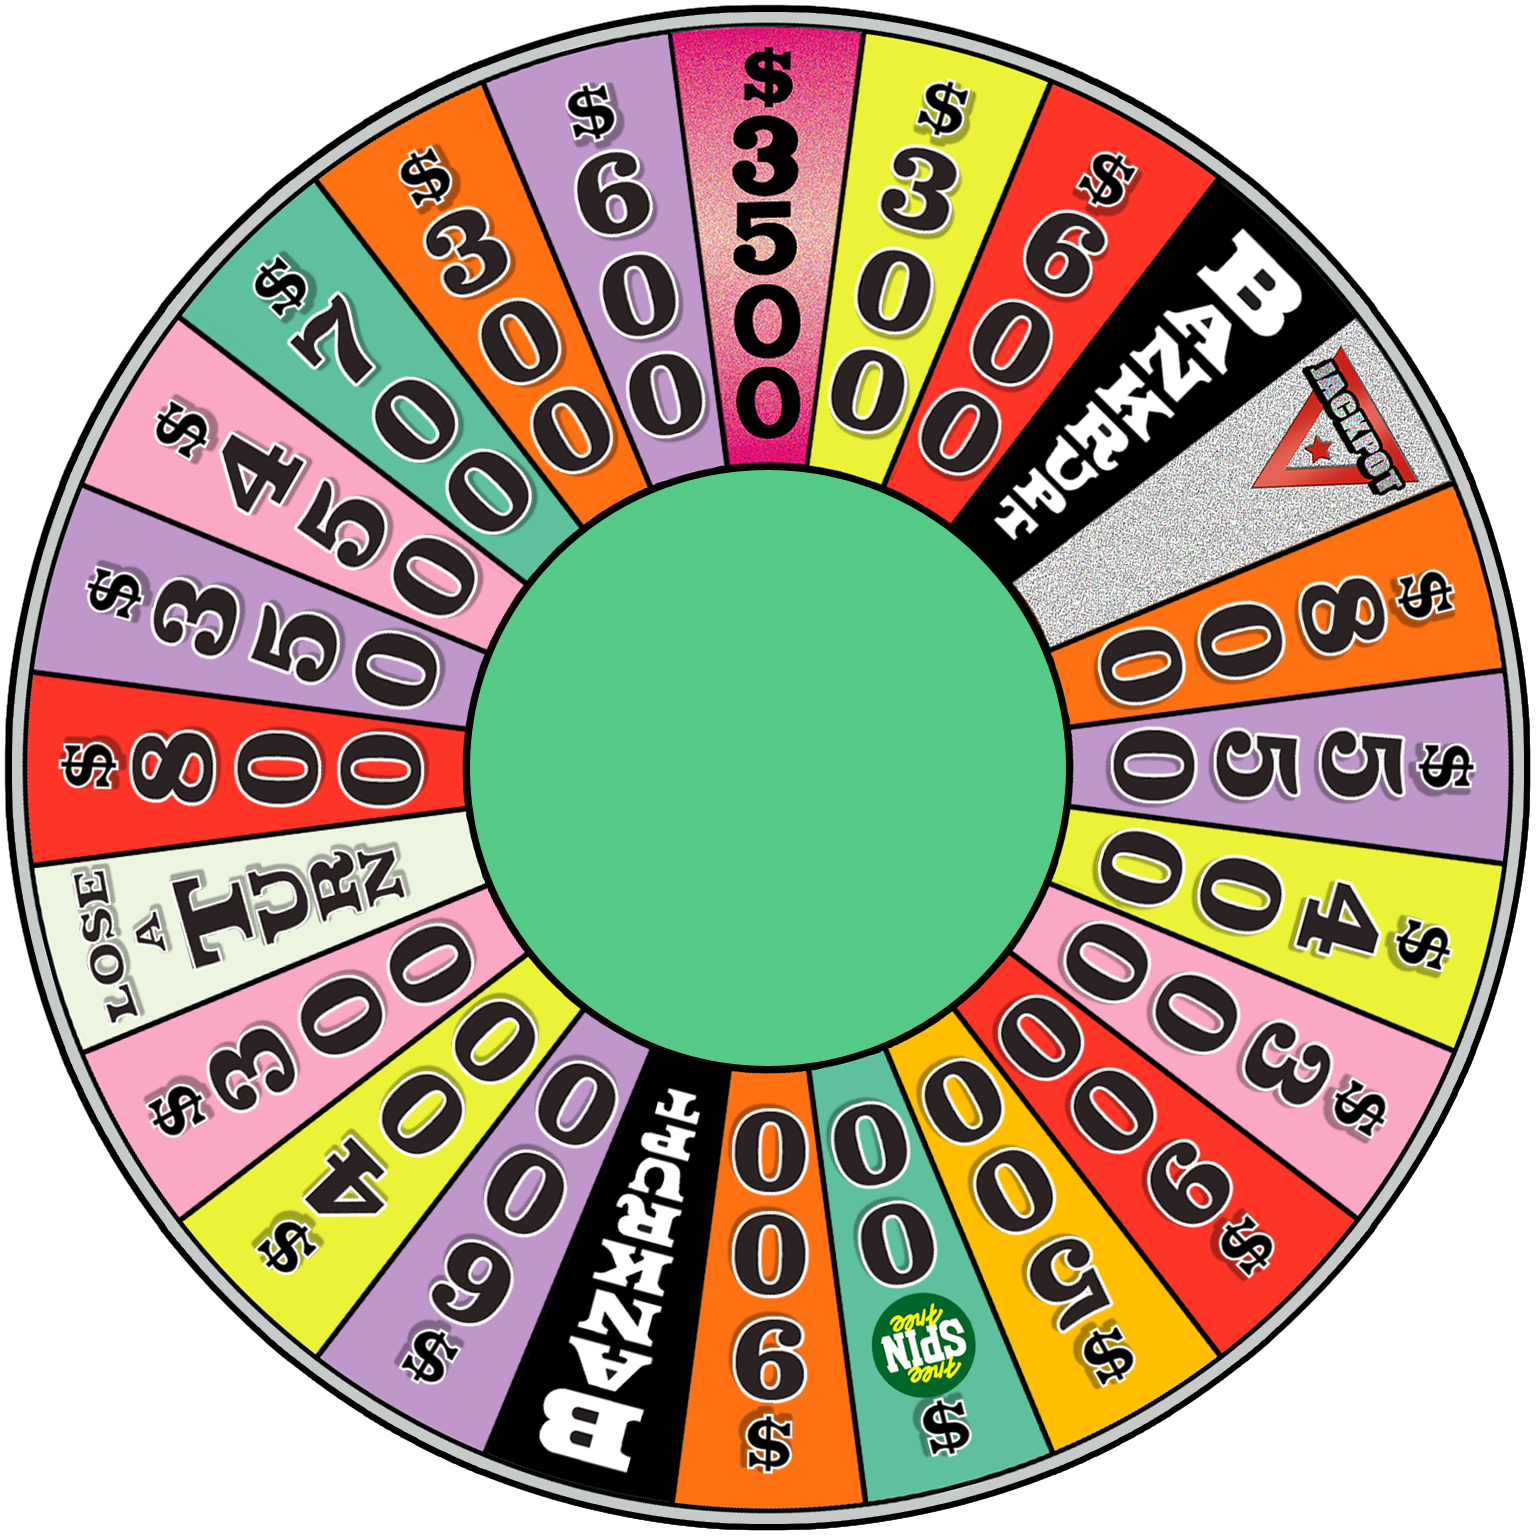 Wheel of Fortune Deluxe 2 PC game - Jackpot round by wheelgenius